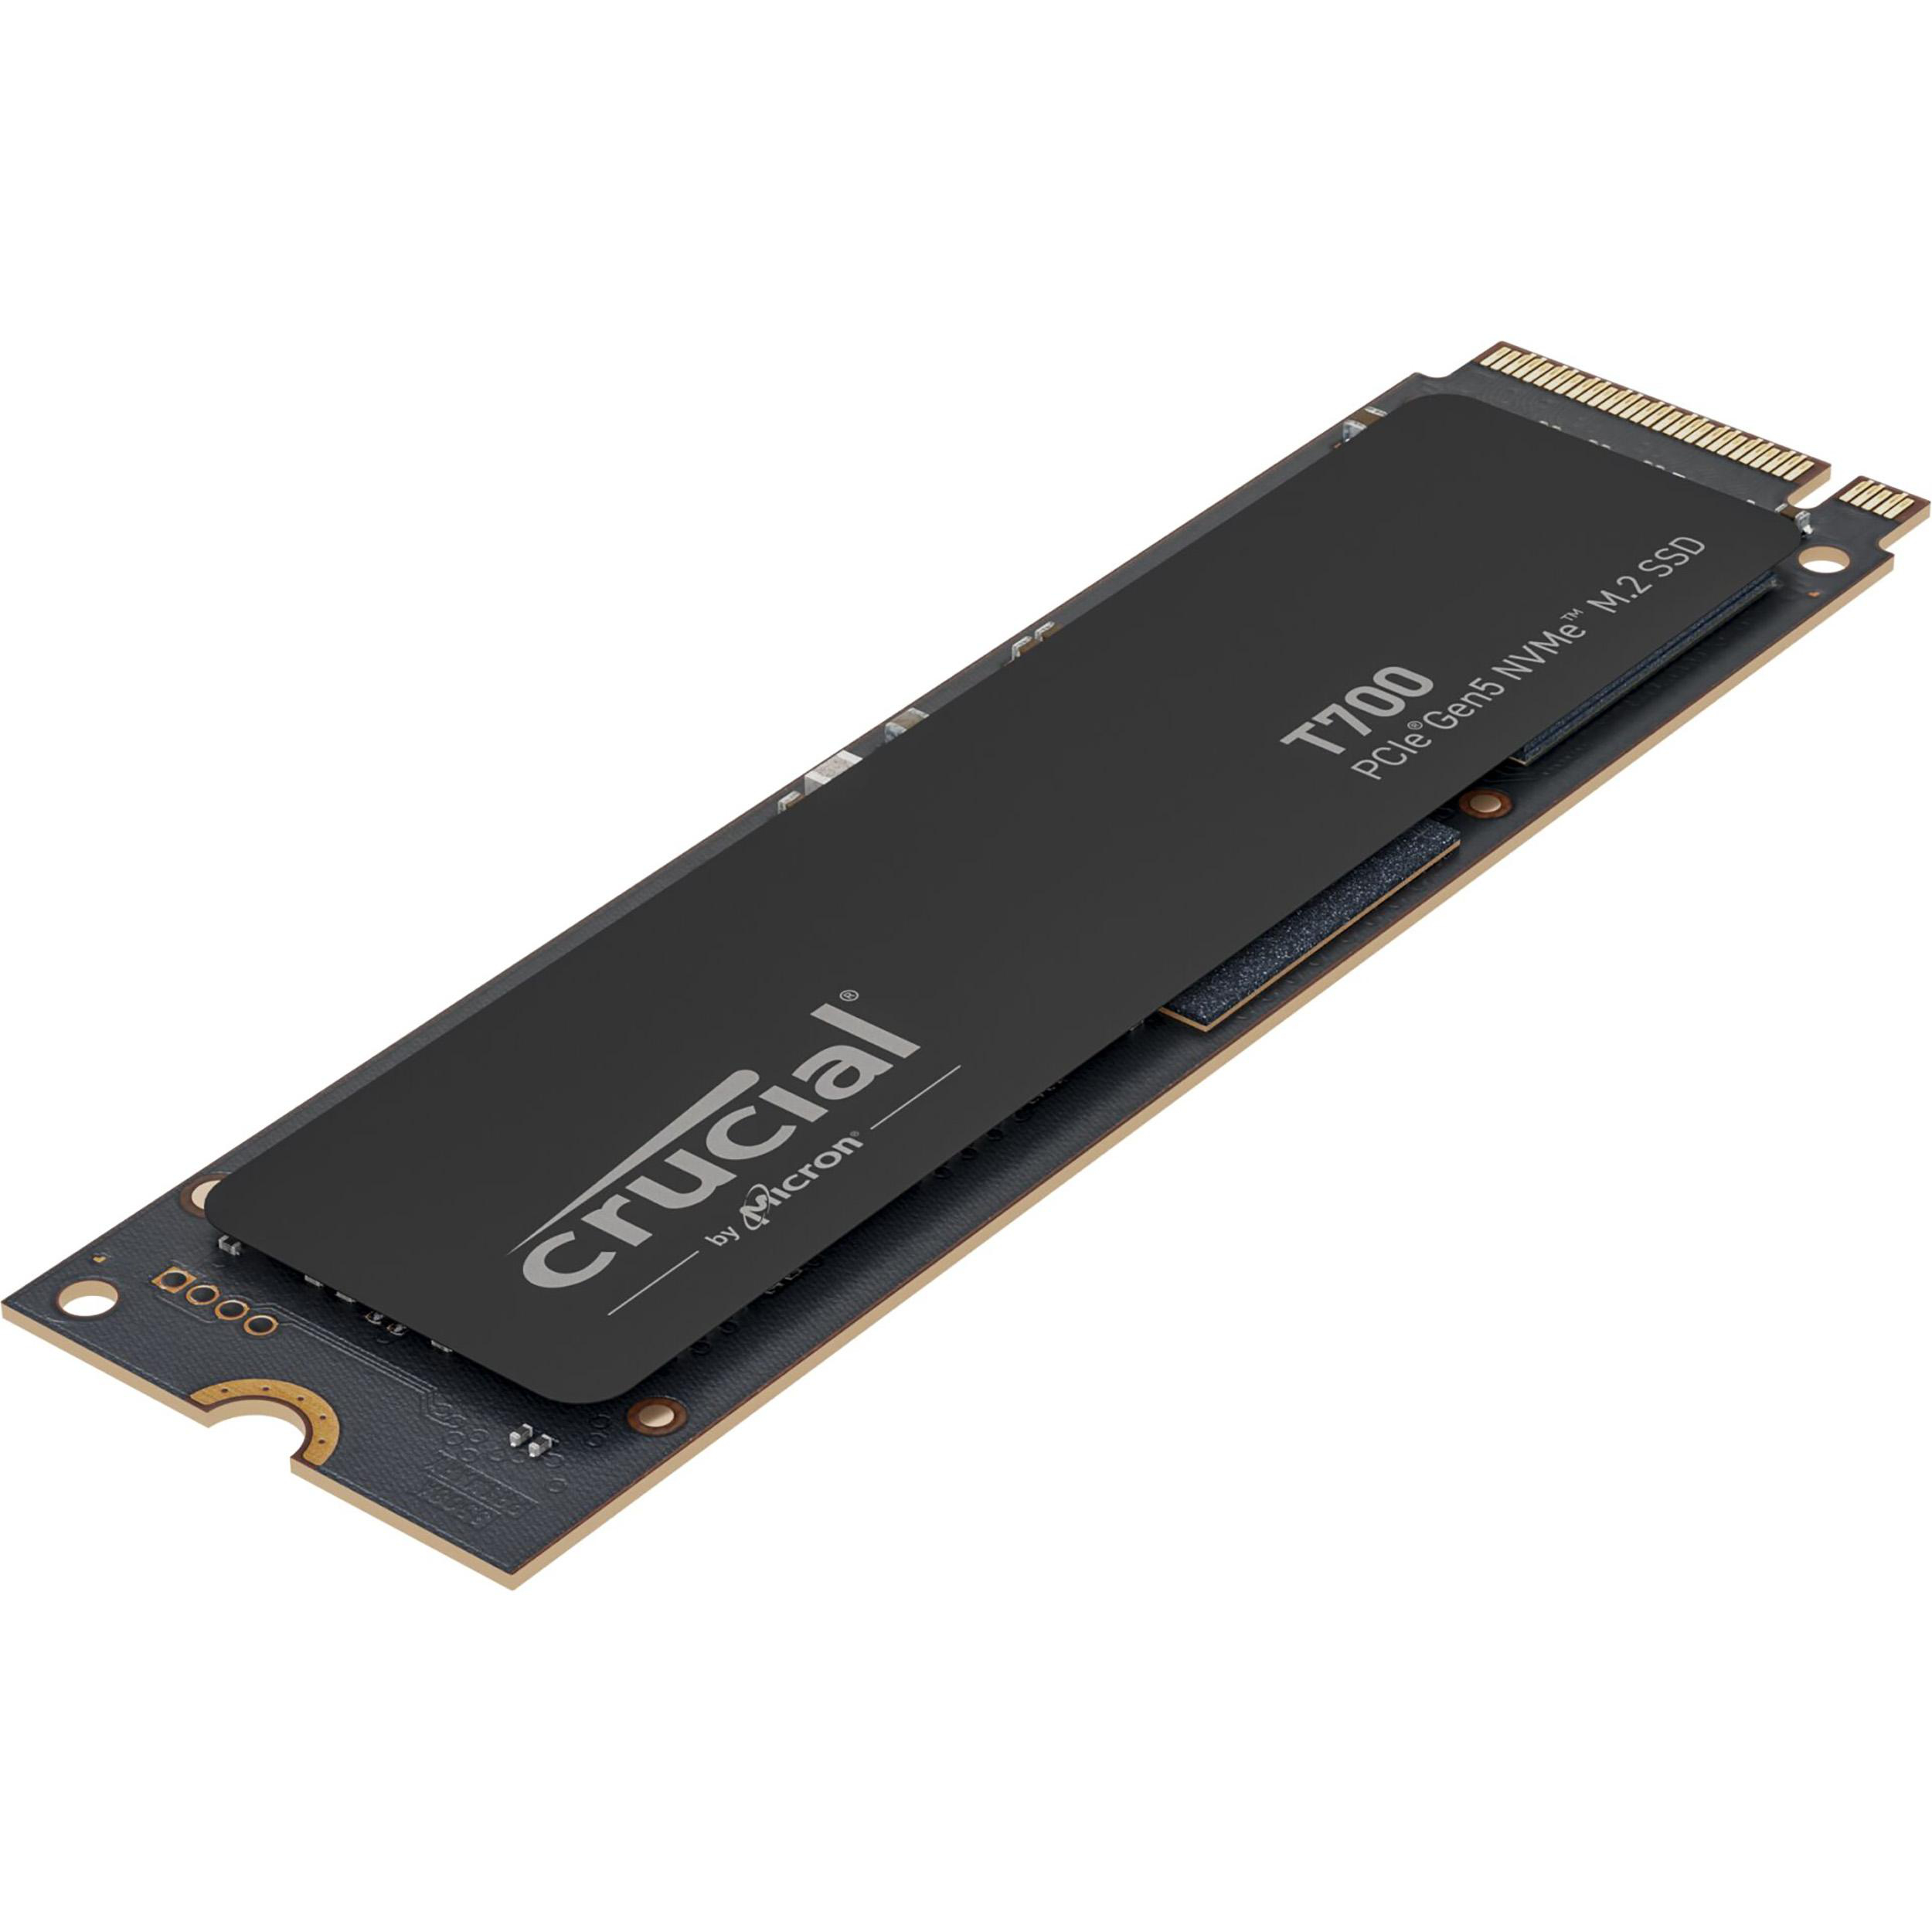 intern T700 SSD, Gen5 M.2, CRUCIAL PCIe NVMe TB 1 SSD